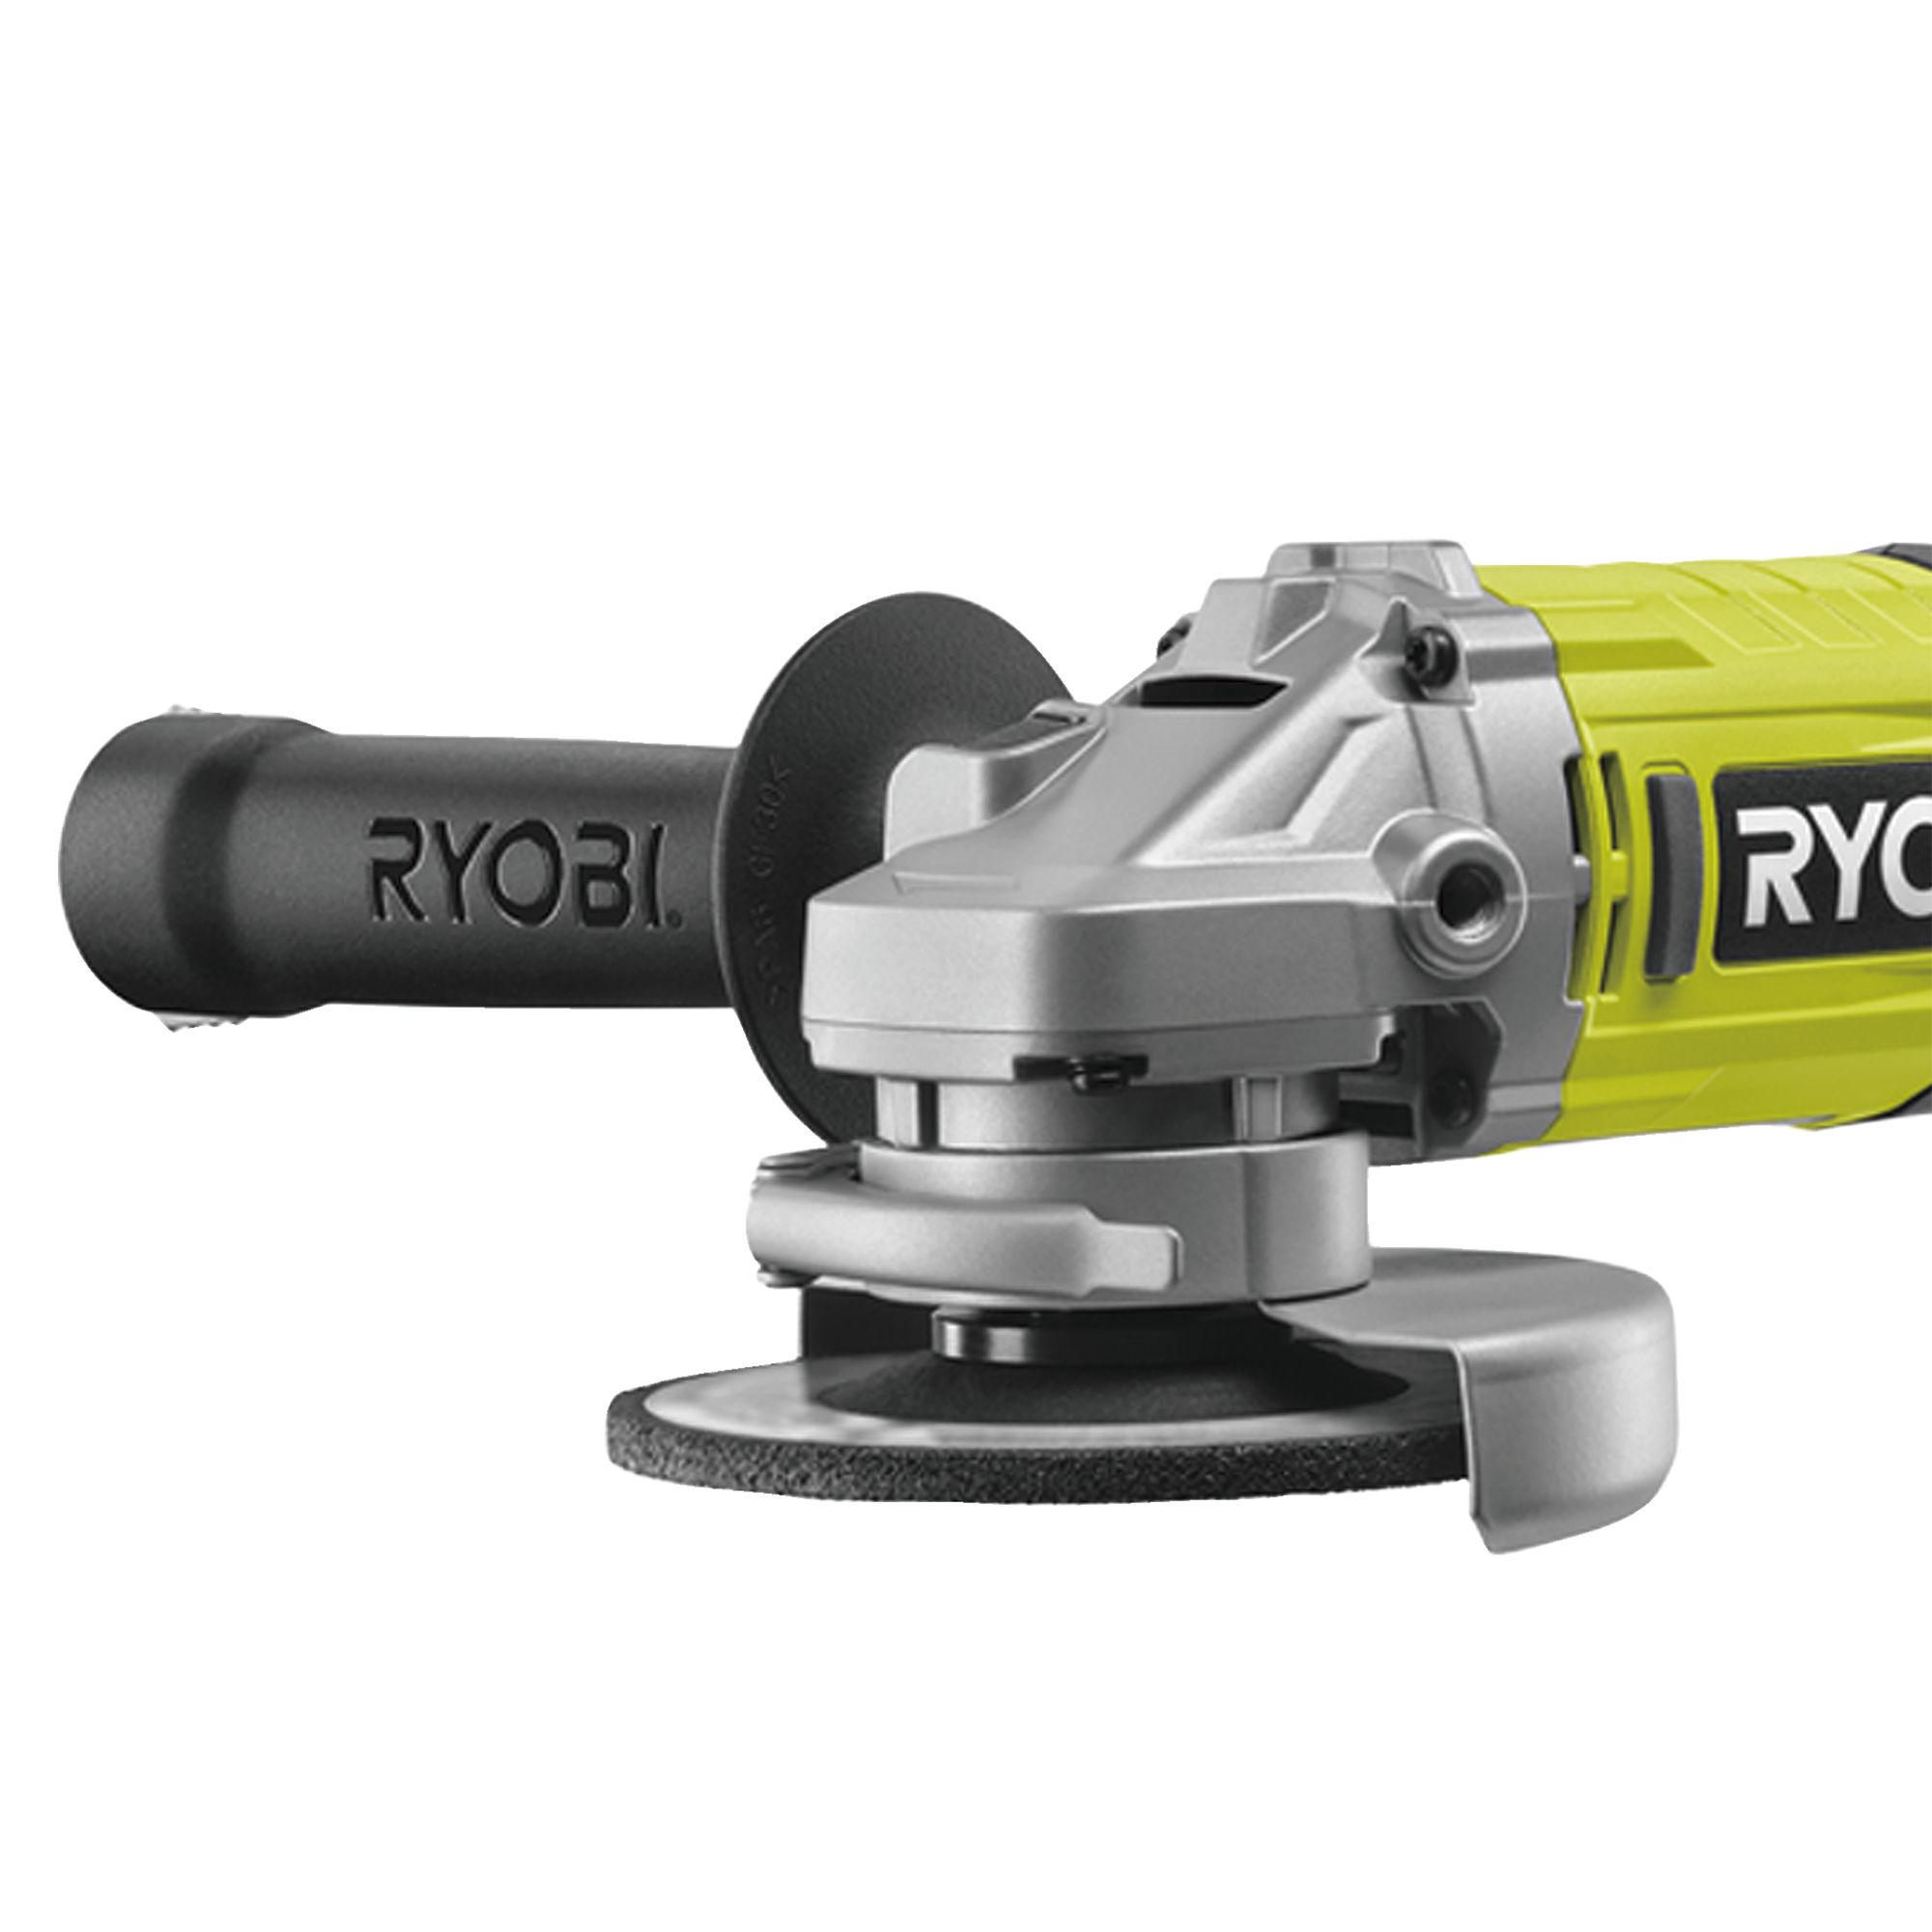 Ryobi ONE+ 18V One+ 115mm Brushed Cordless Angle grinder (Bare Tool) - RAG18115-0